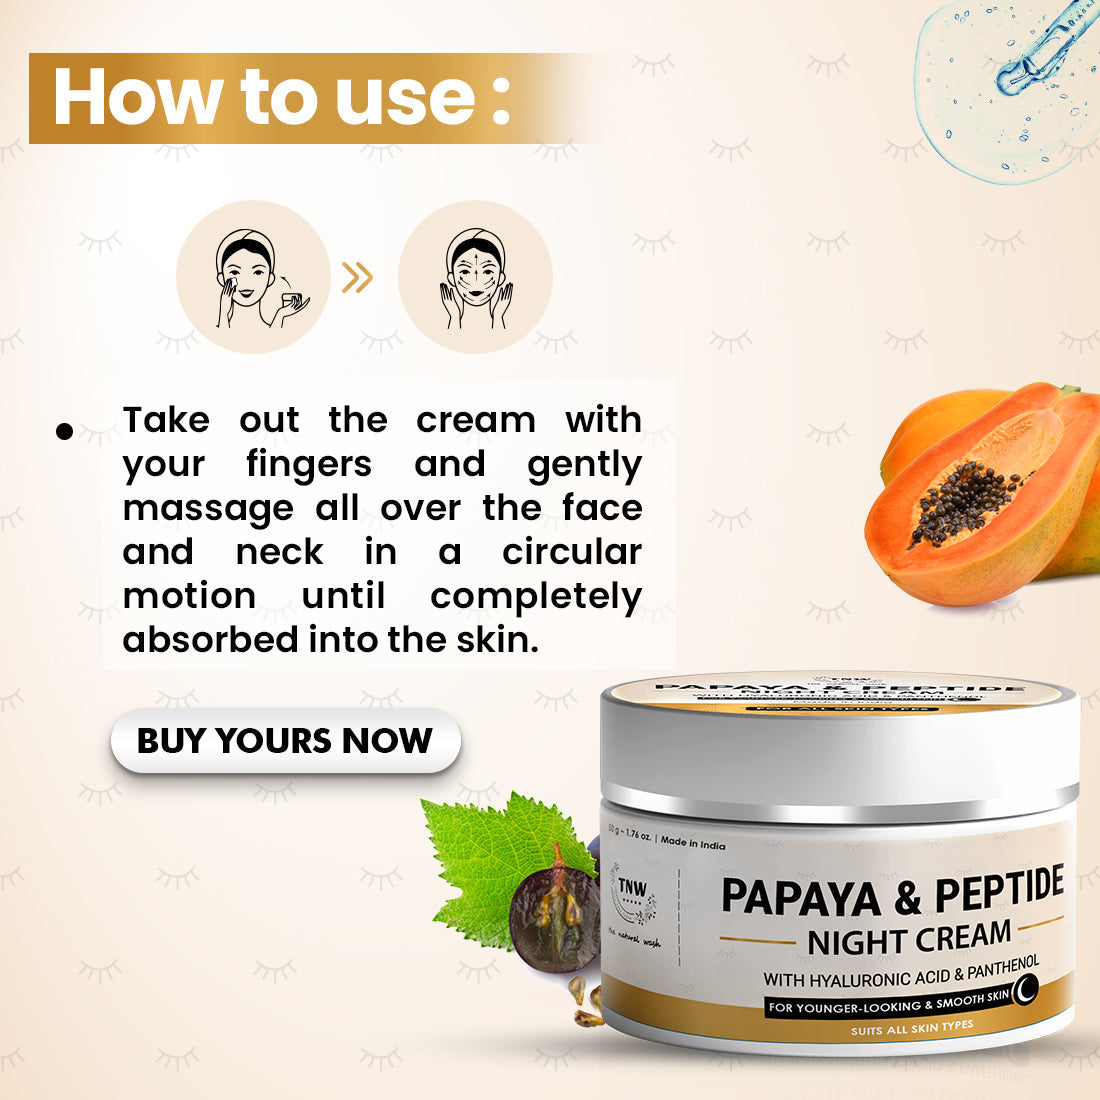 Papaya & Peptide Night Cream for Healthy Skin.